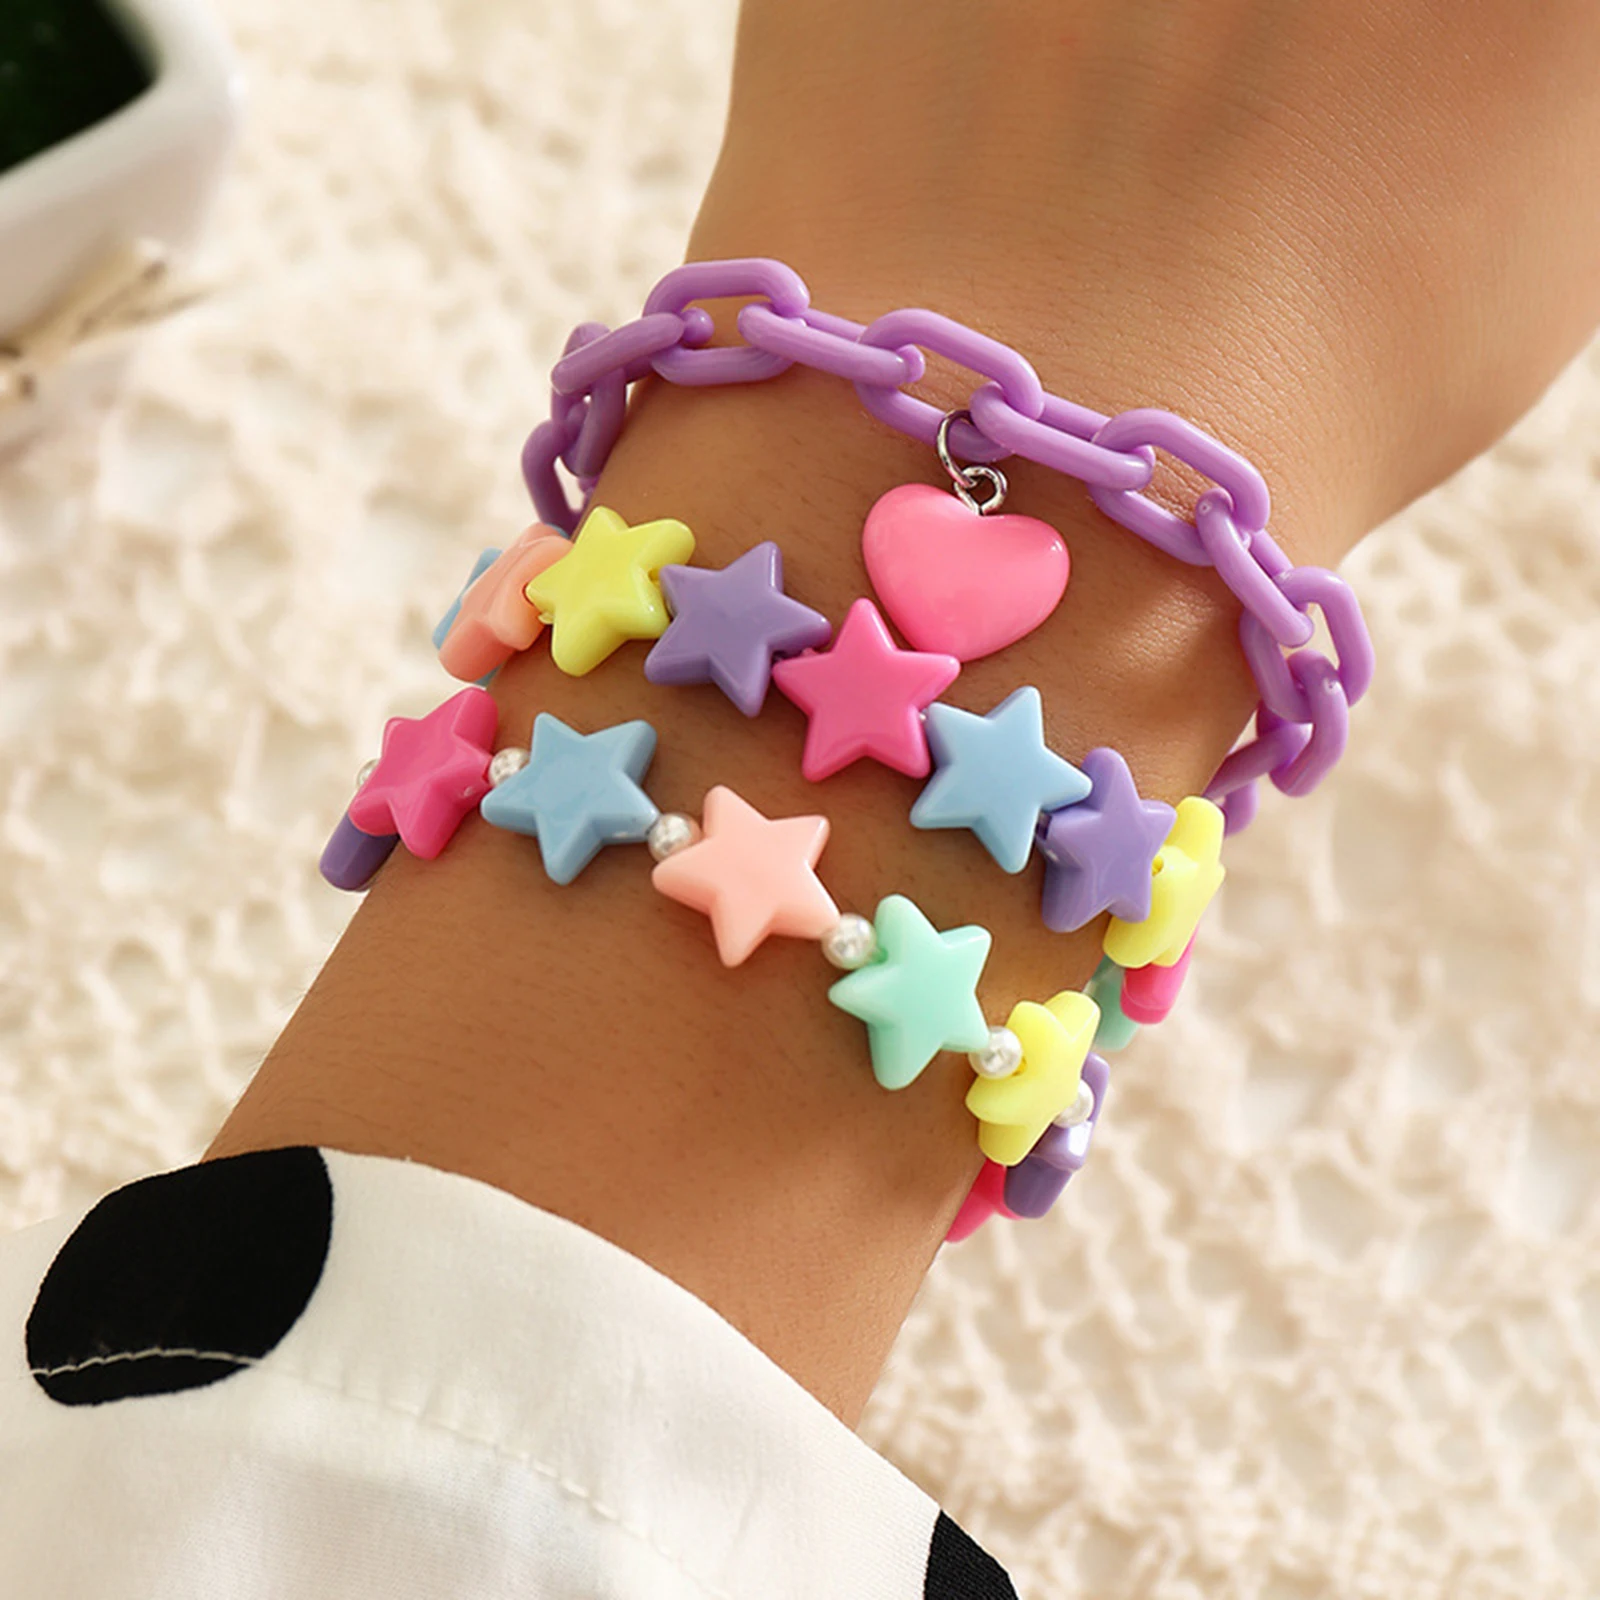 1 Set Colorful Fashionable Bracelets Stars Heart Pearls Bangle Adjustable